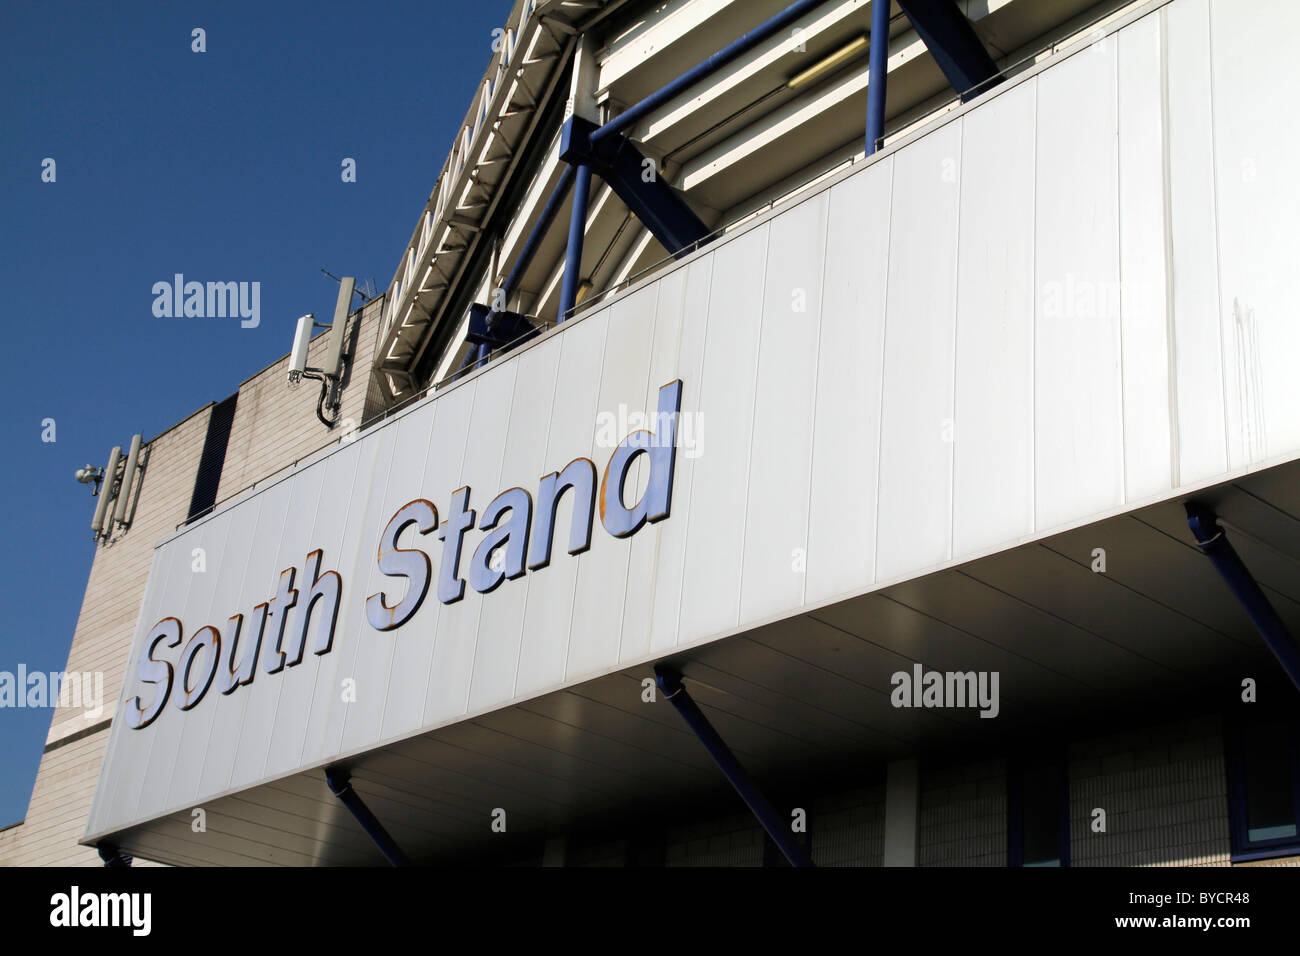 TOTTENHAM HOTSPURS Stadion WHITE HART LANE, TOTTENHAM, LONDON Foto von Julio Etchart Stockfoto